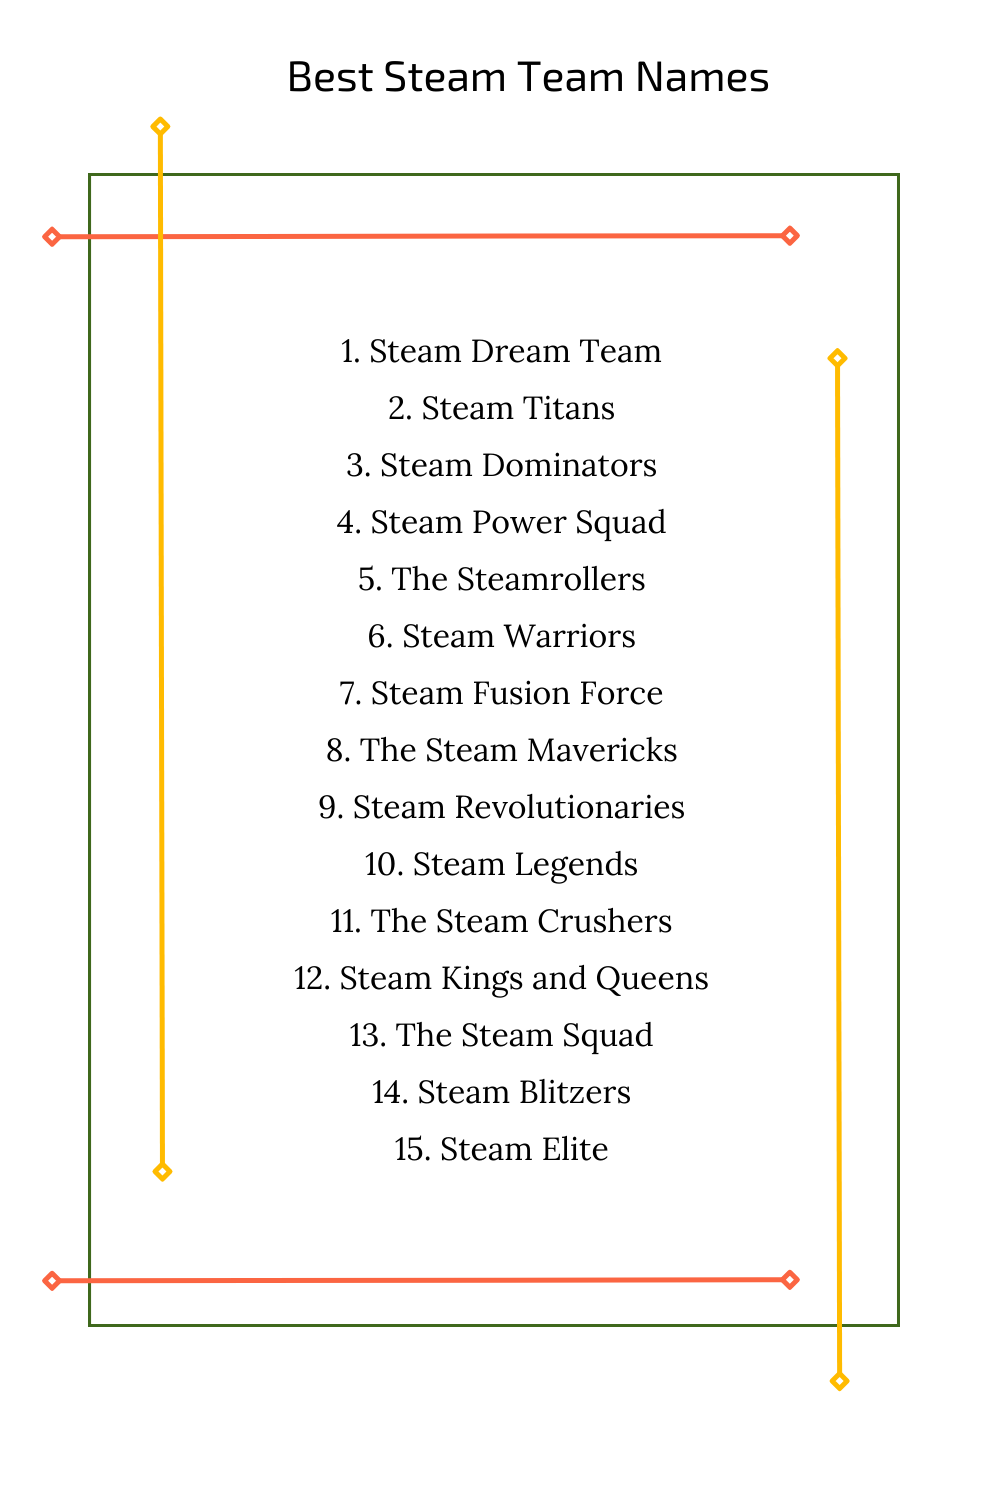 Best Steam Team Names